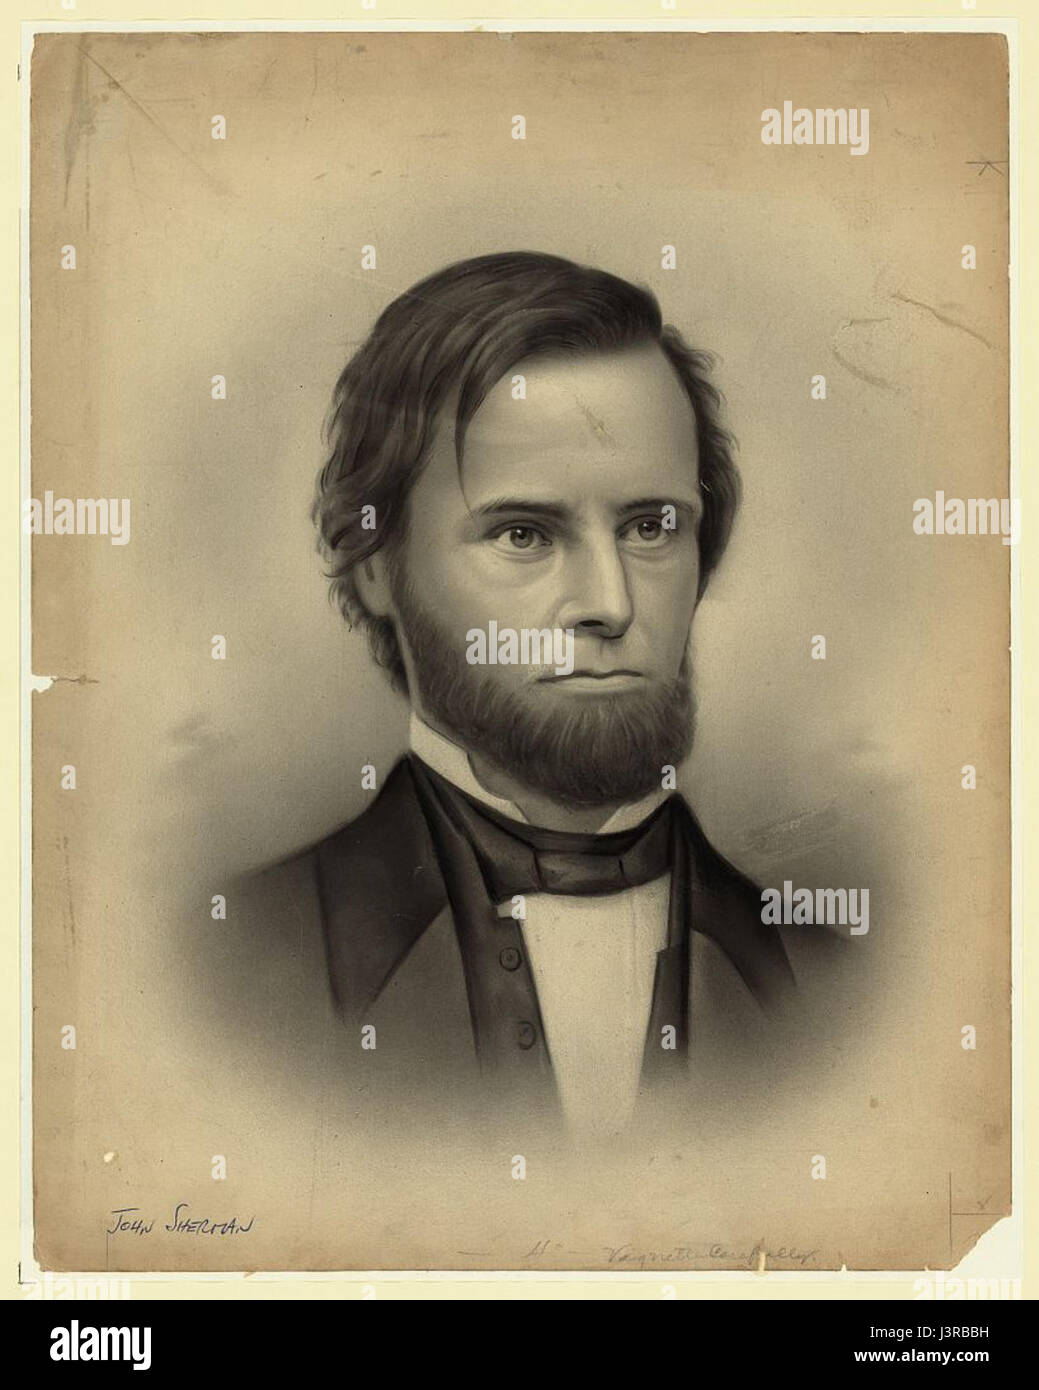 John Sherman 1846 drawing Stock Photo